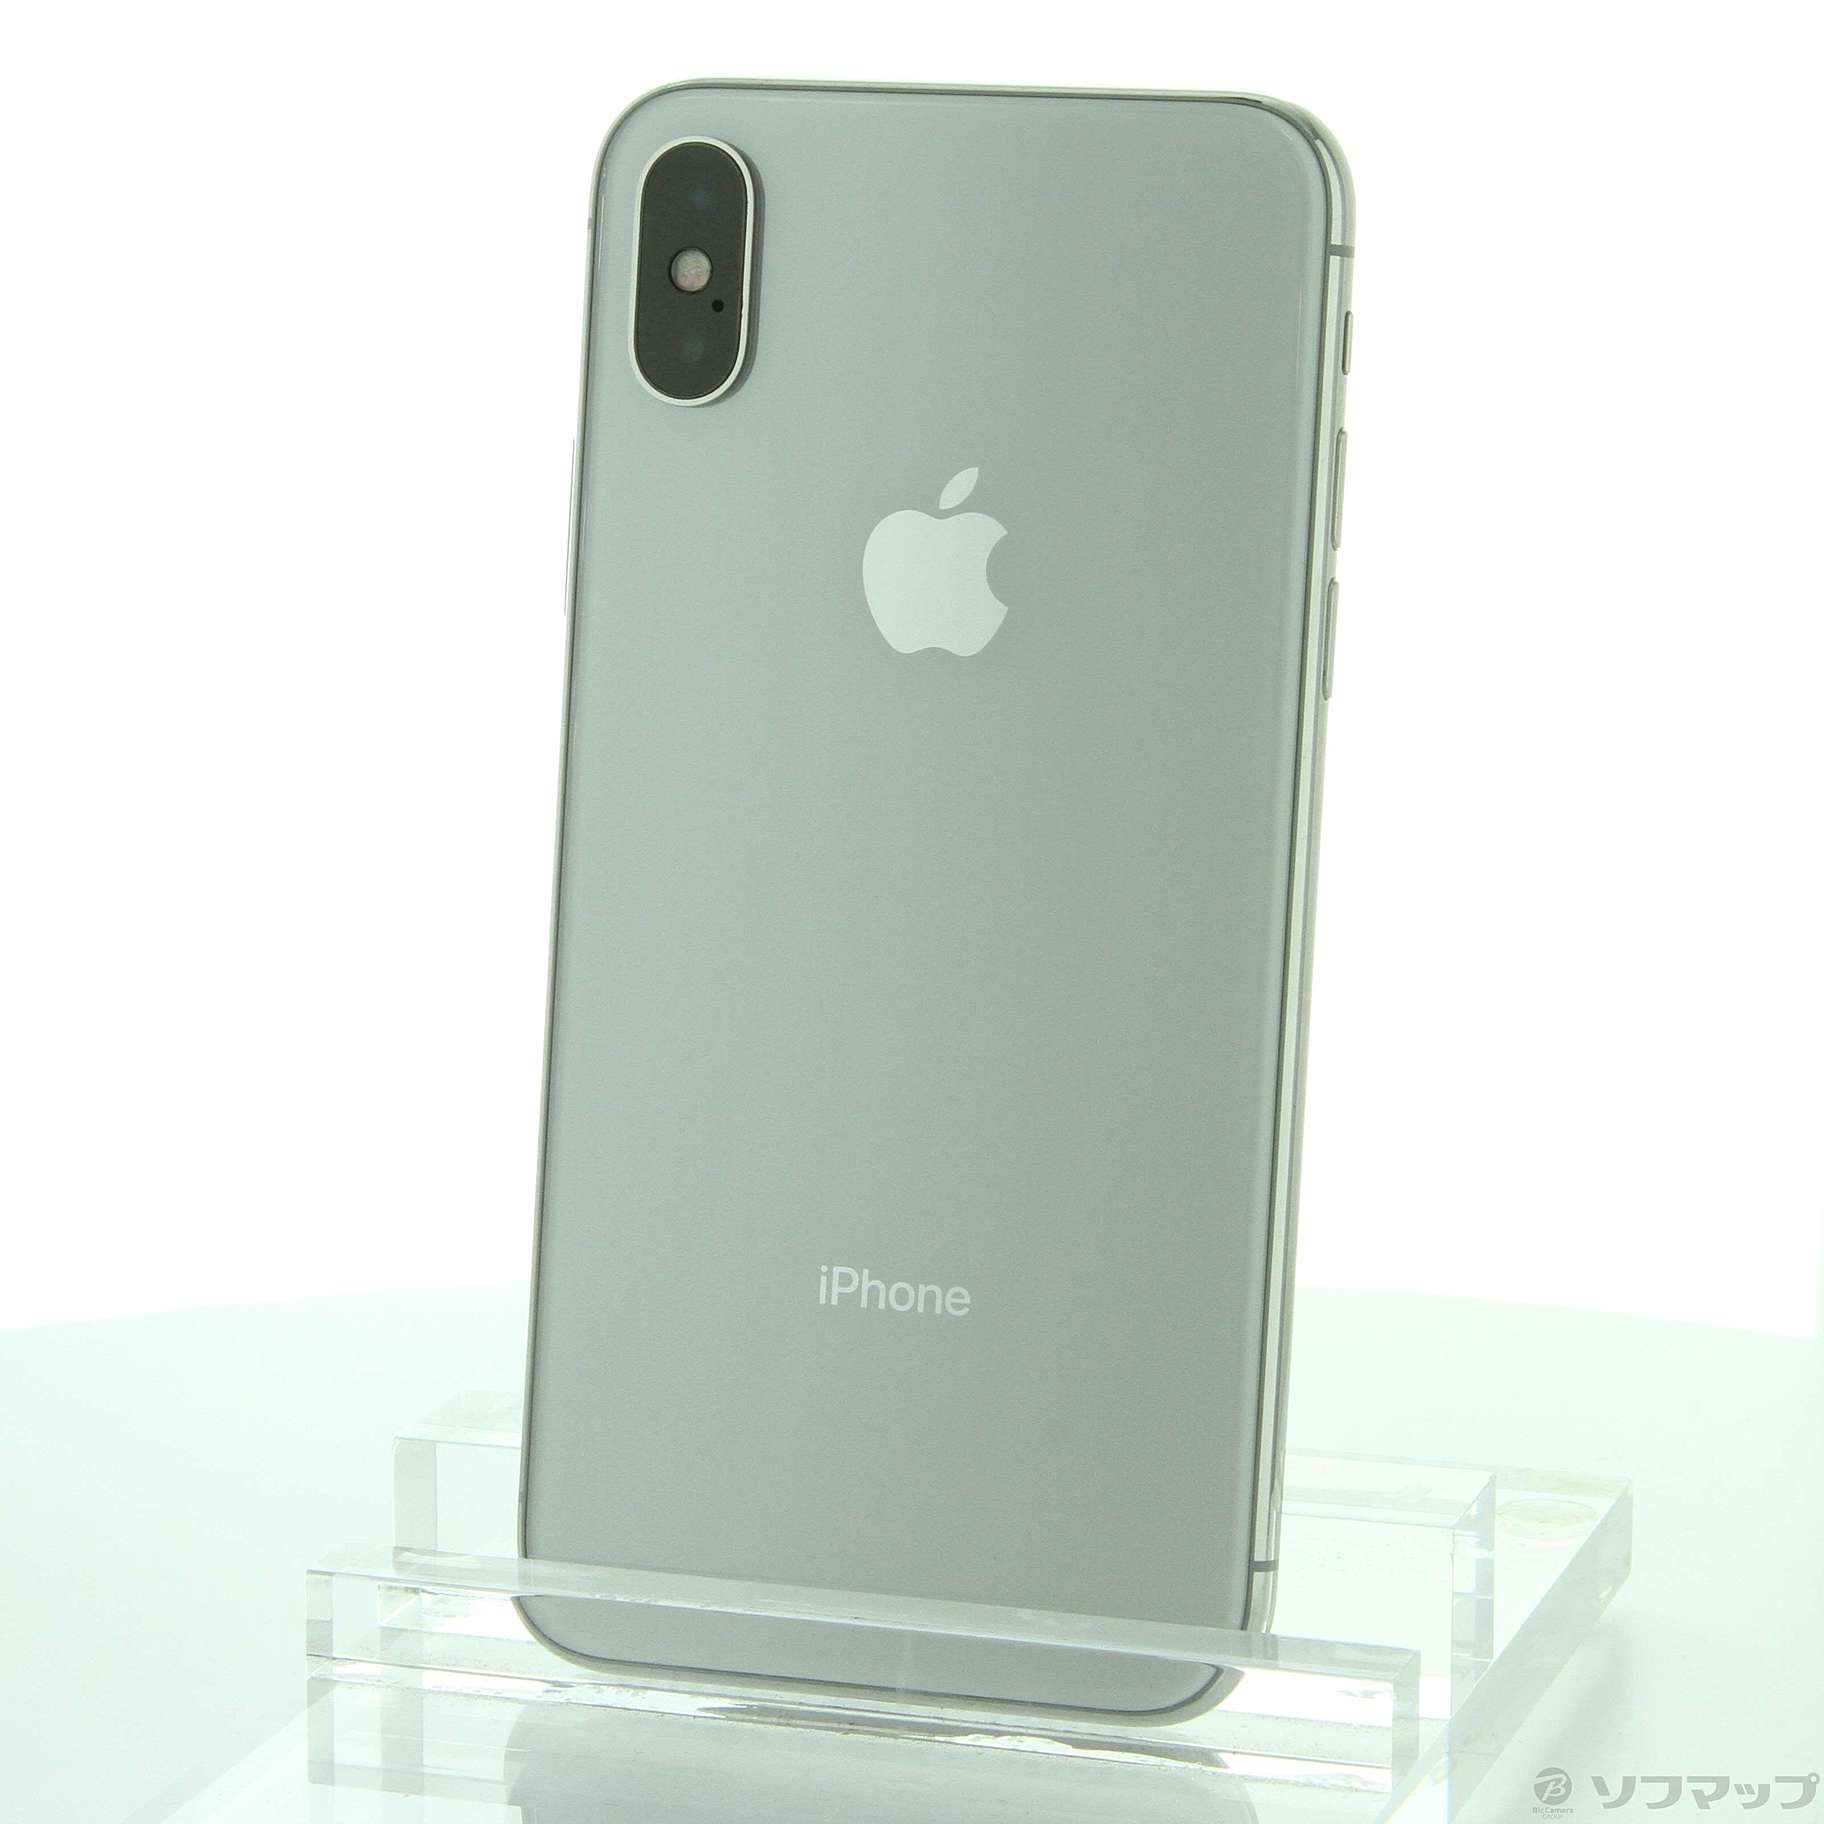 SIMフリー Apple iPhoneX 256GB シルバー | angeloawards.com